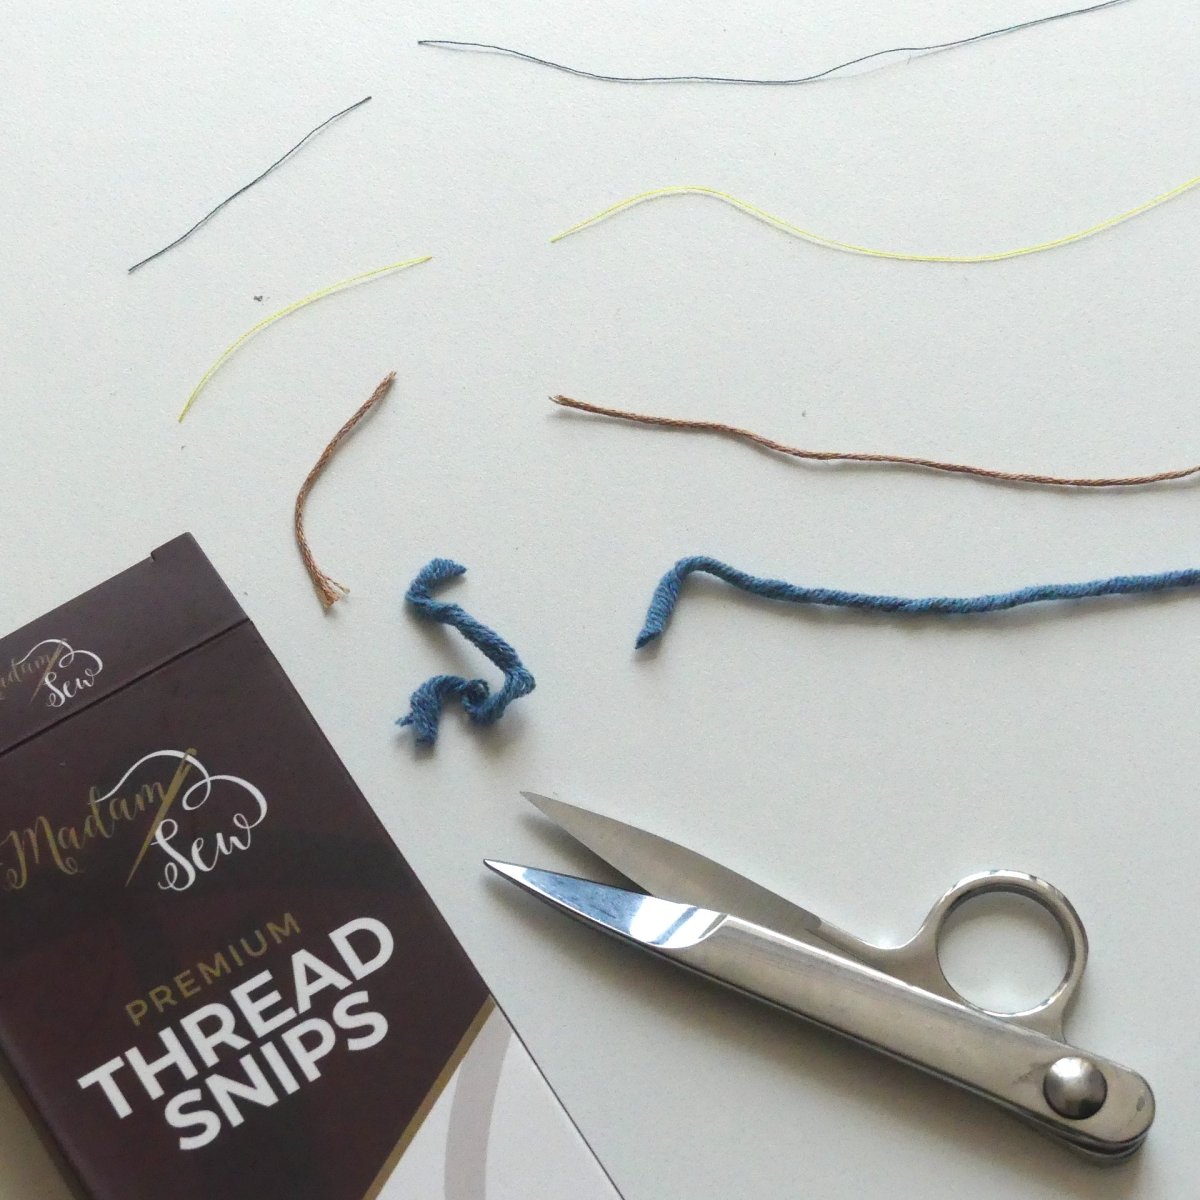 Madam Sew thread snips